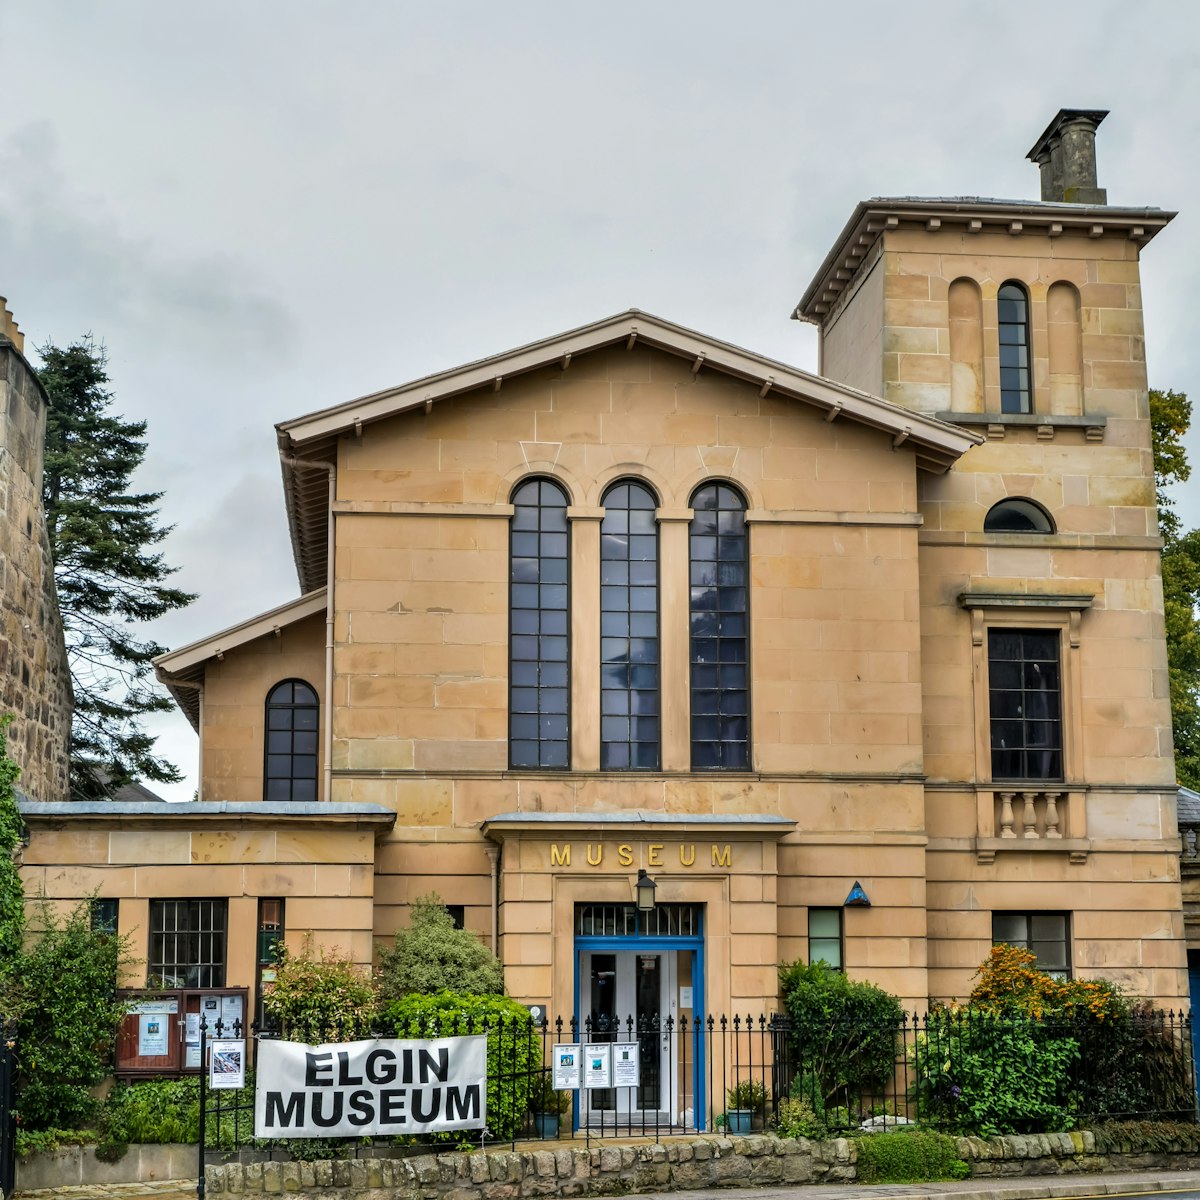 Elgin Museum in Elgin, Scotland.